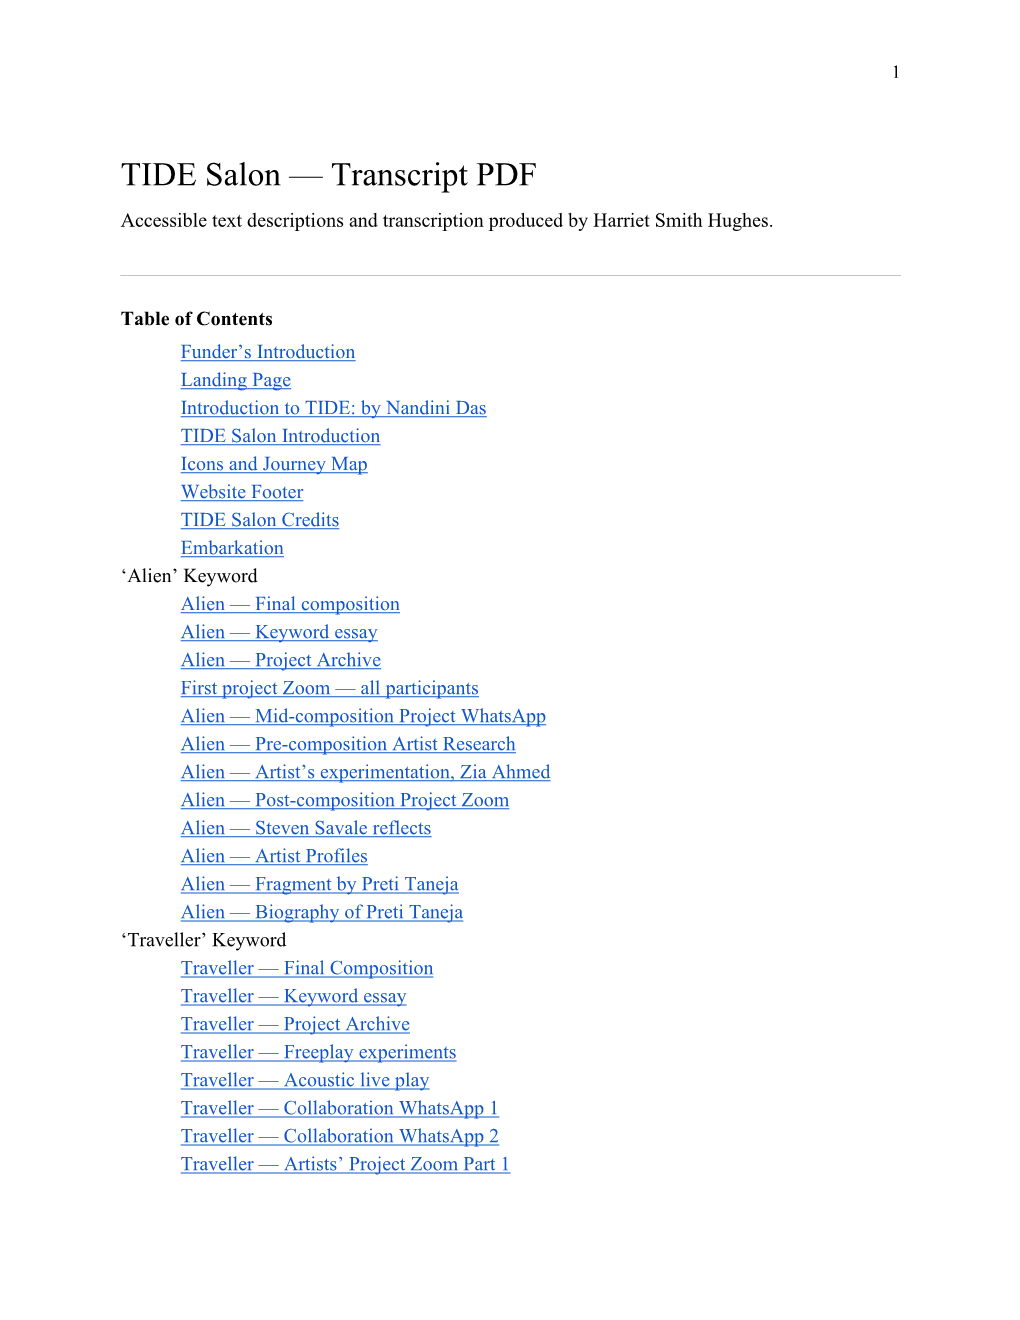 TIDE Salon — Transcript PDF Accessible Text Descriptions and Transcription Produced by Harriet Smith Hughes